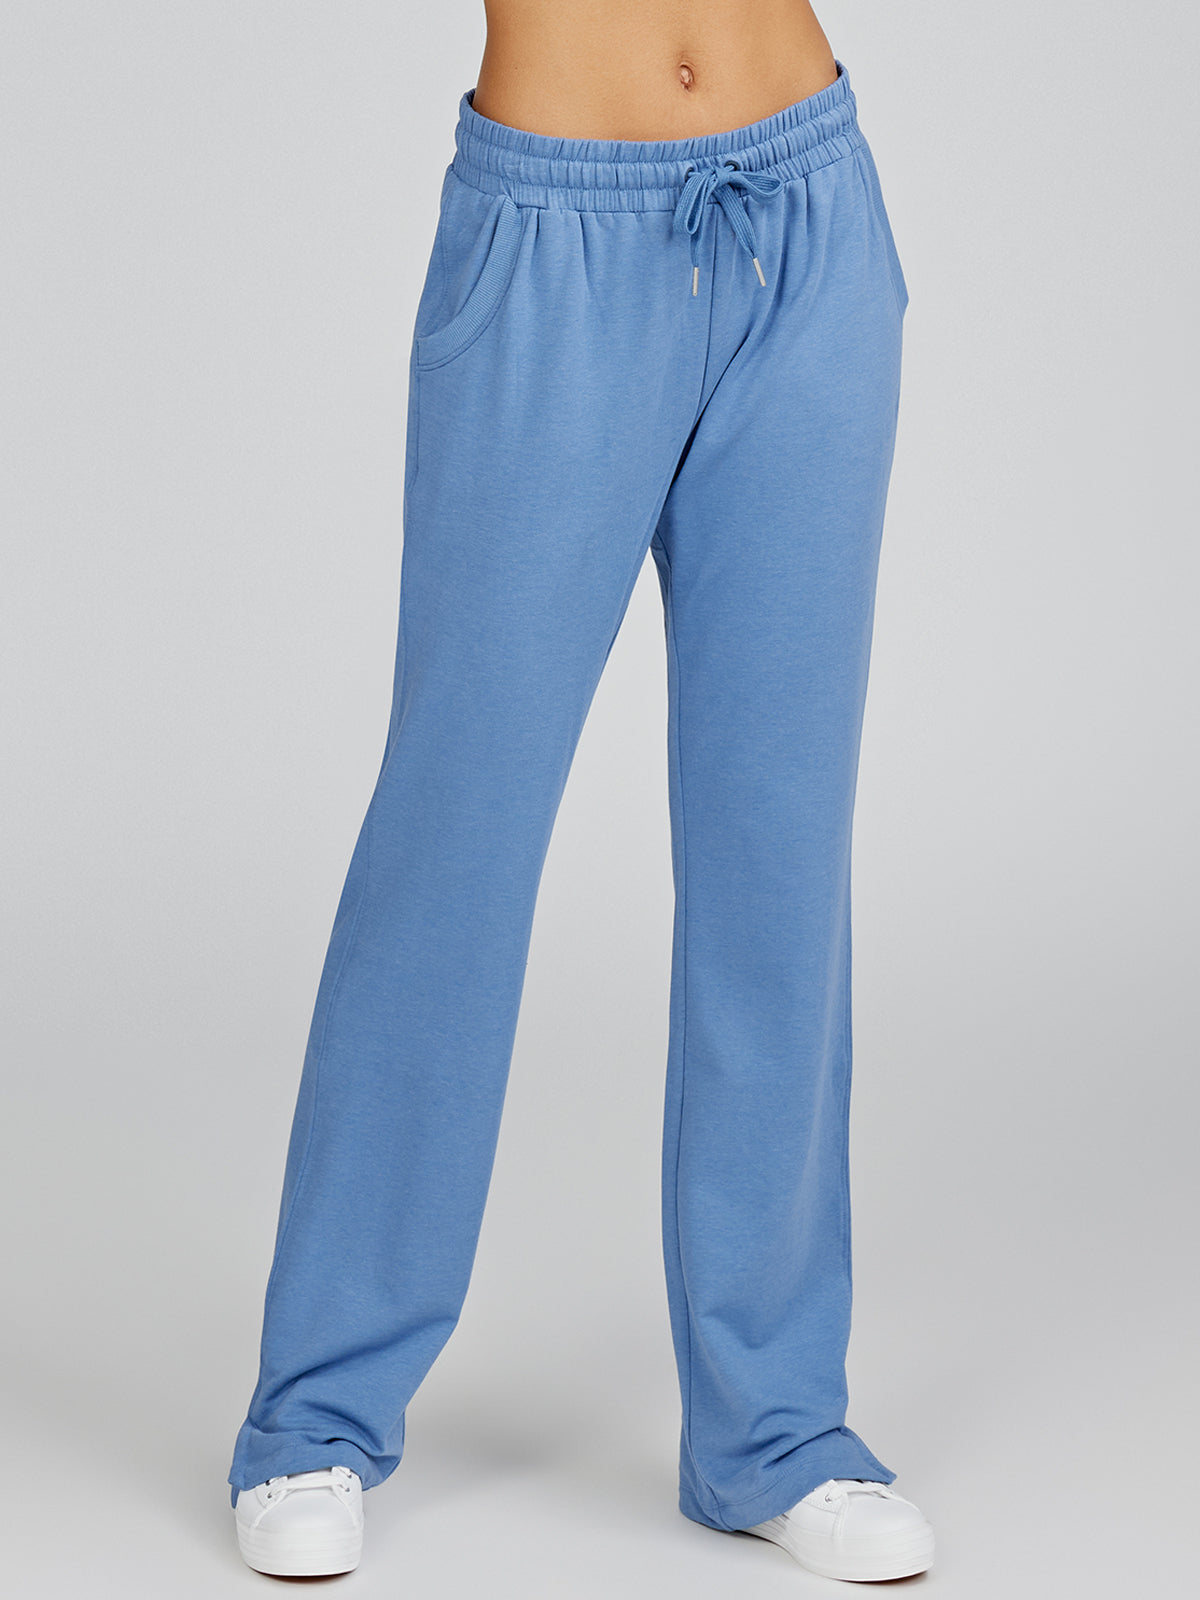 Ladies Pyjamas lounge pants brushed cotton cuff and pocket bottoms